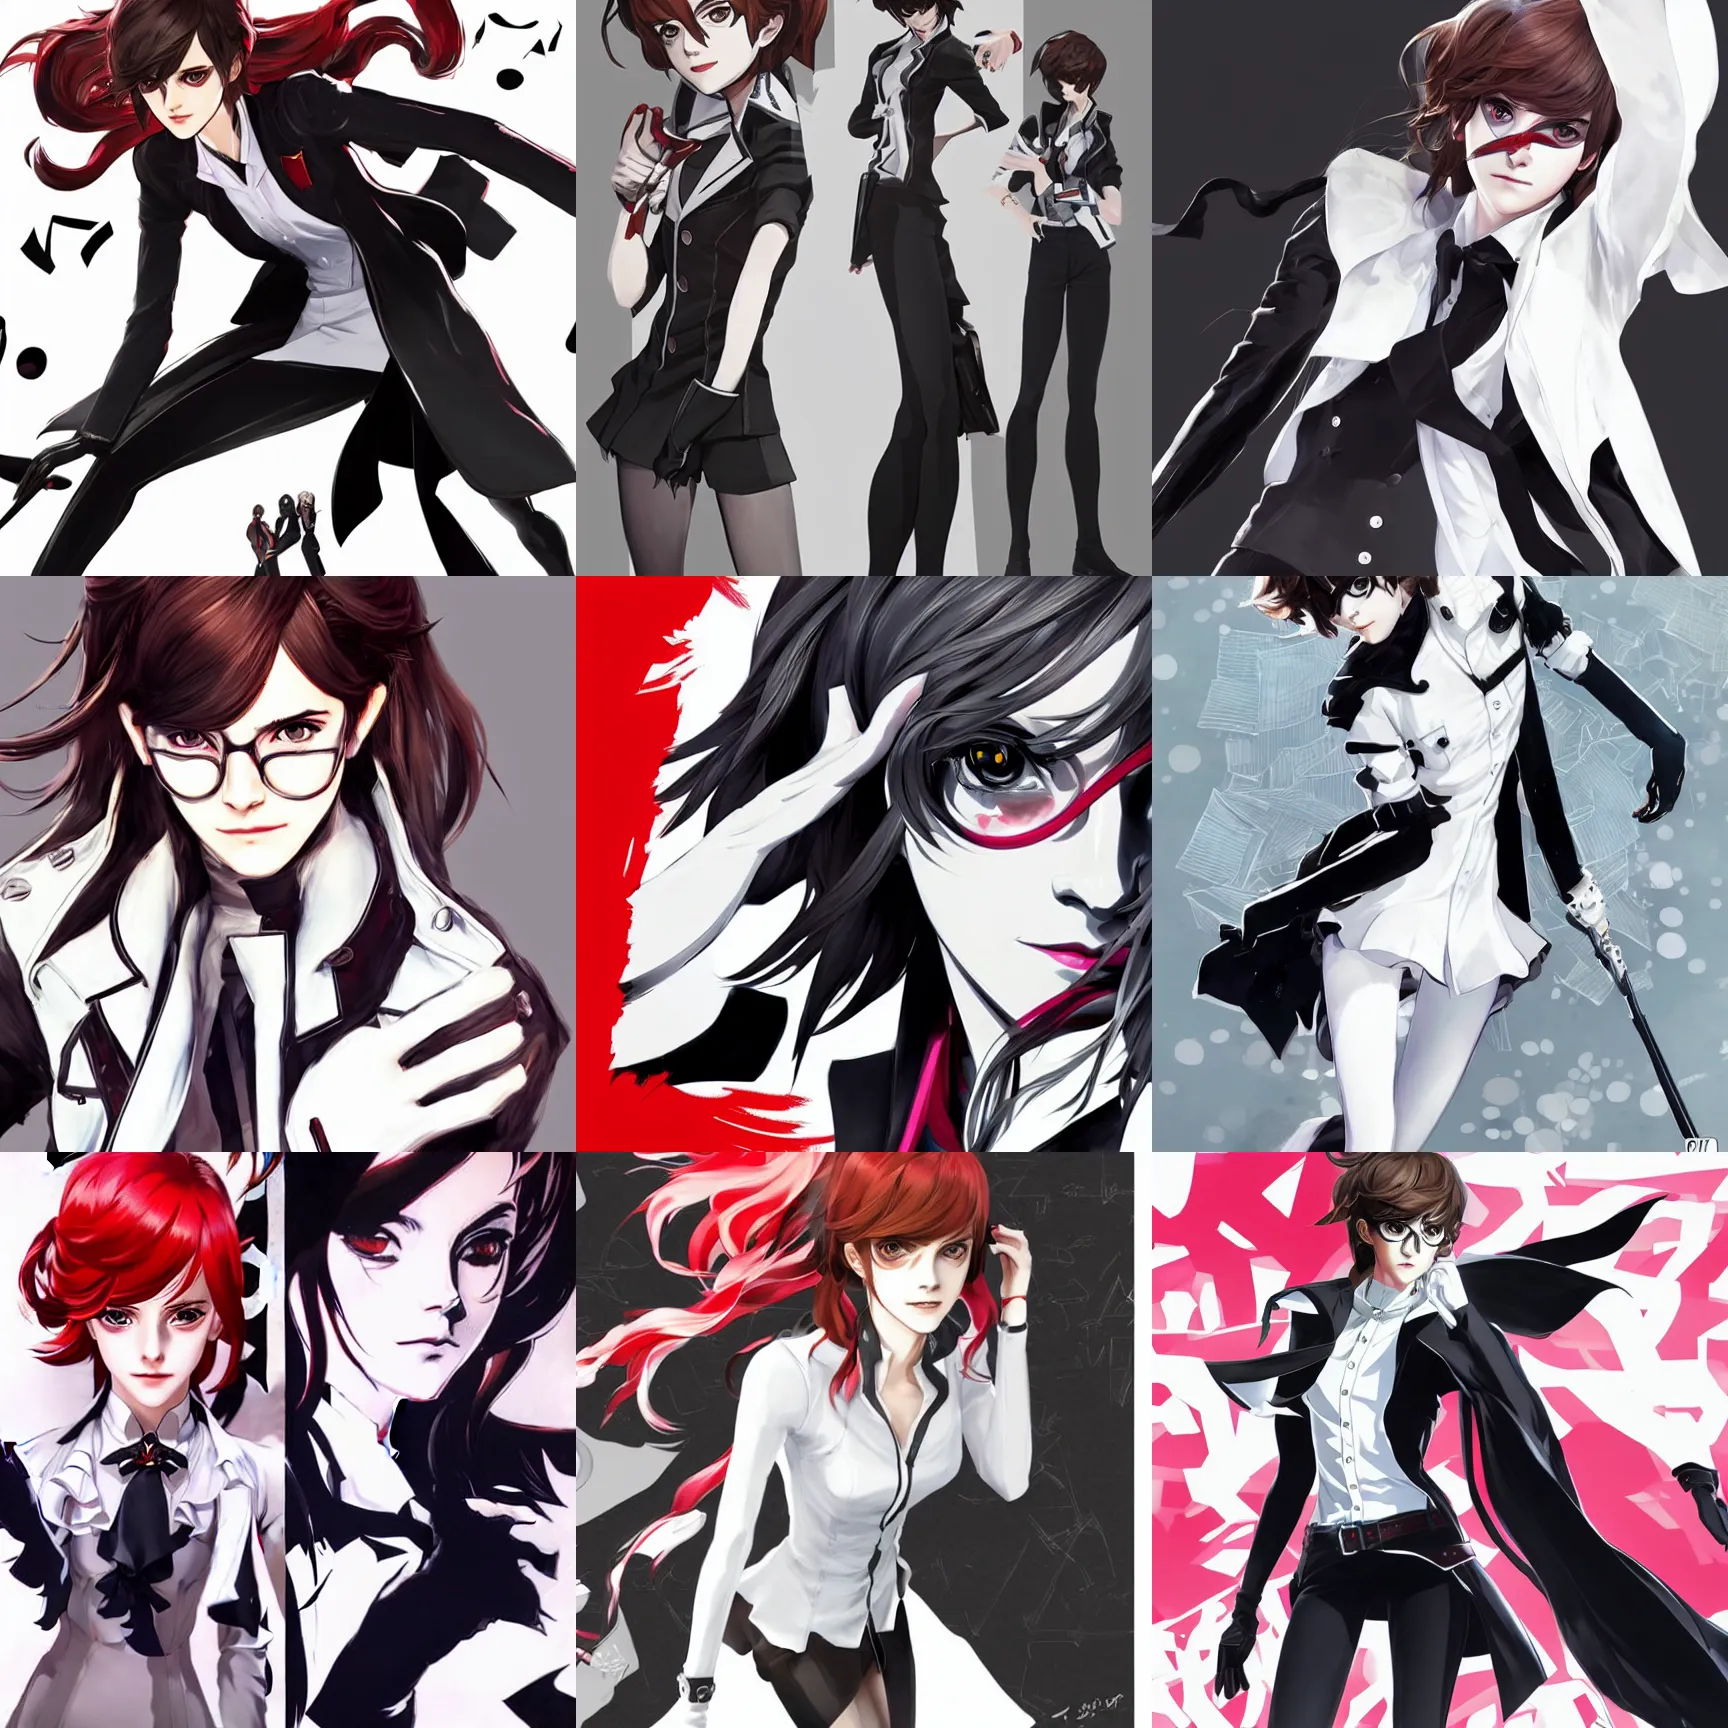 Persona 5 Concept Art & Characters